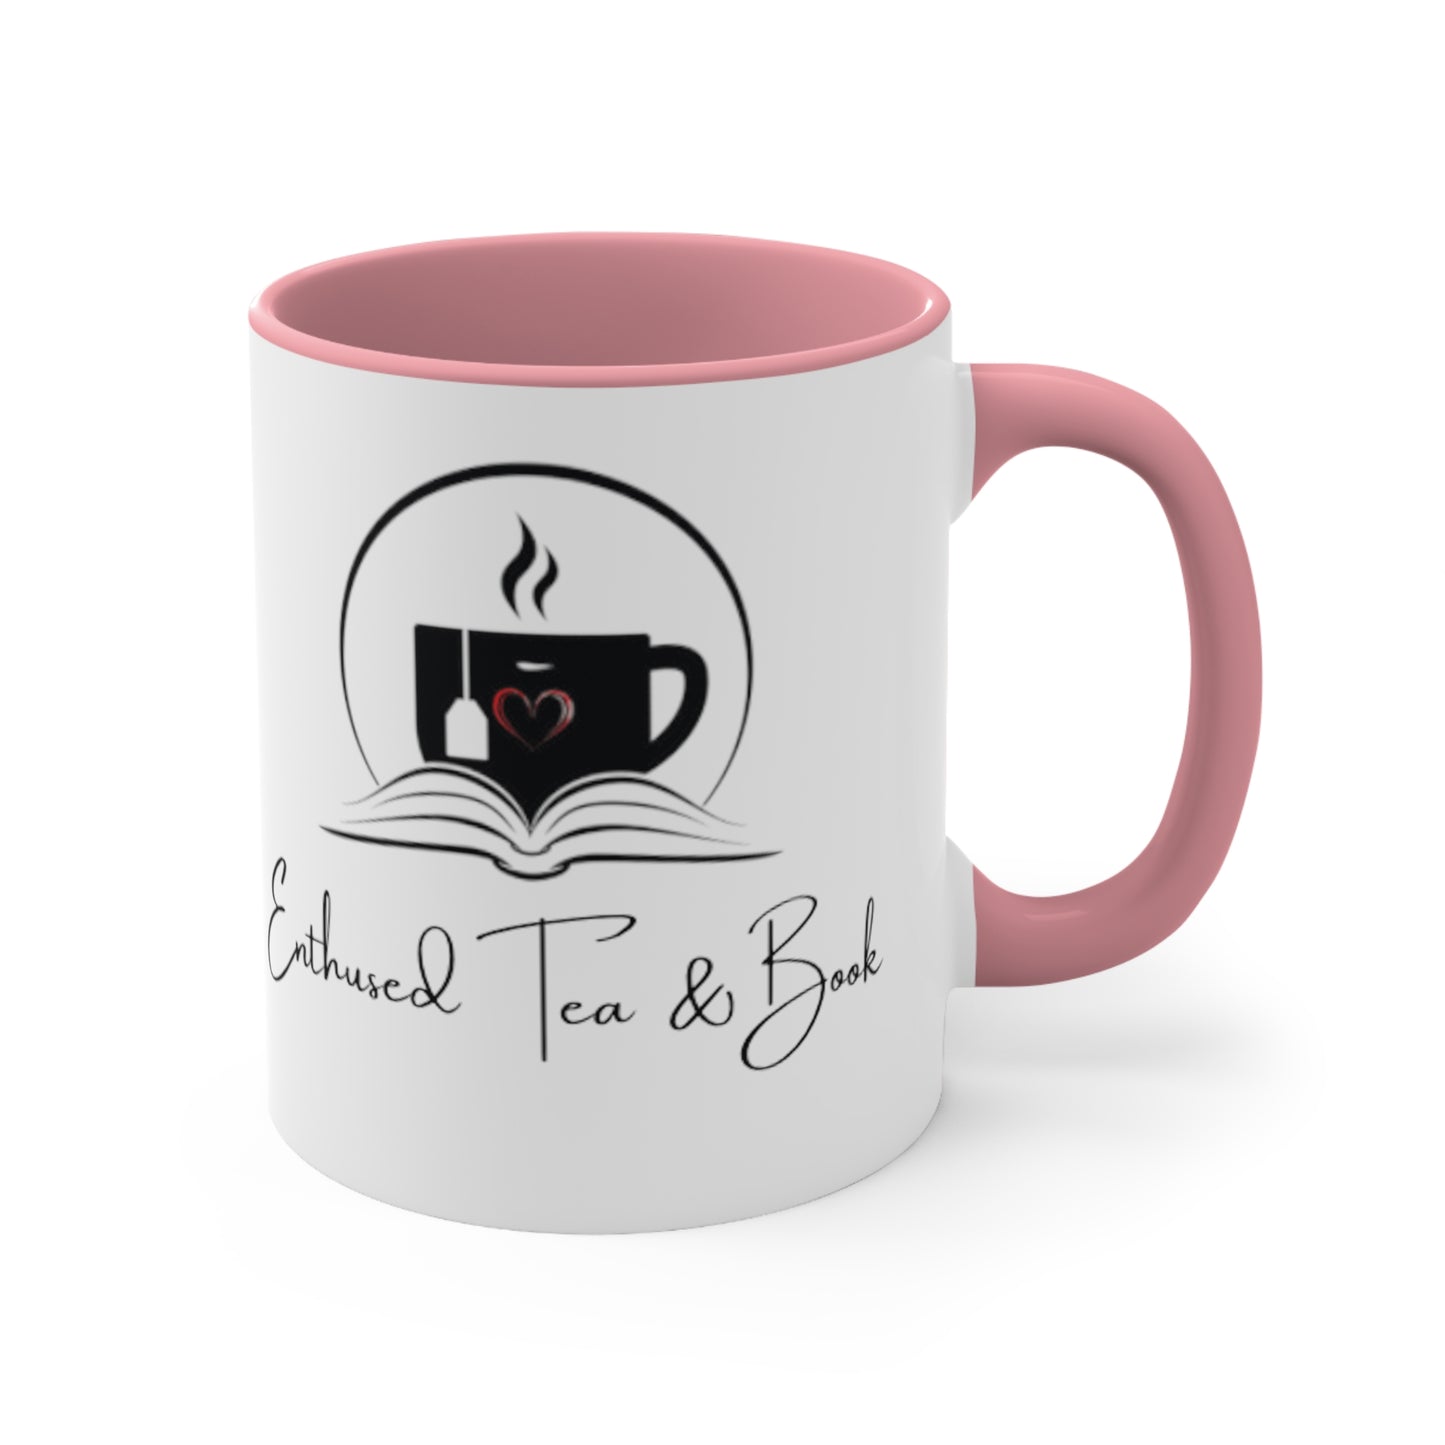 Enthused Tea & Book Logo Mug